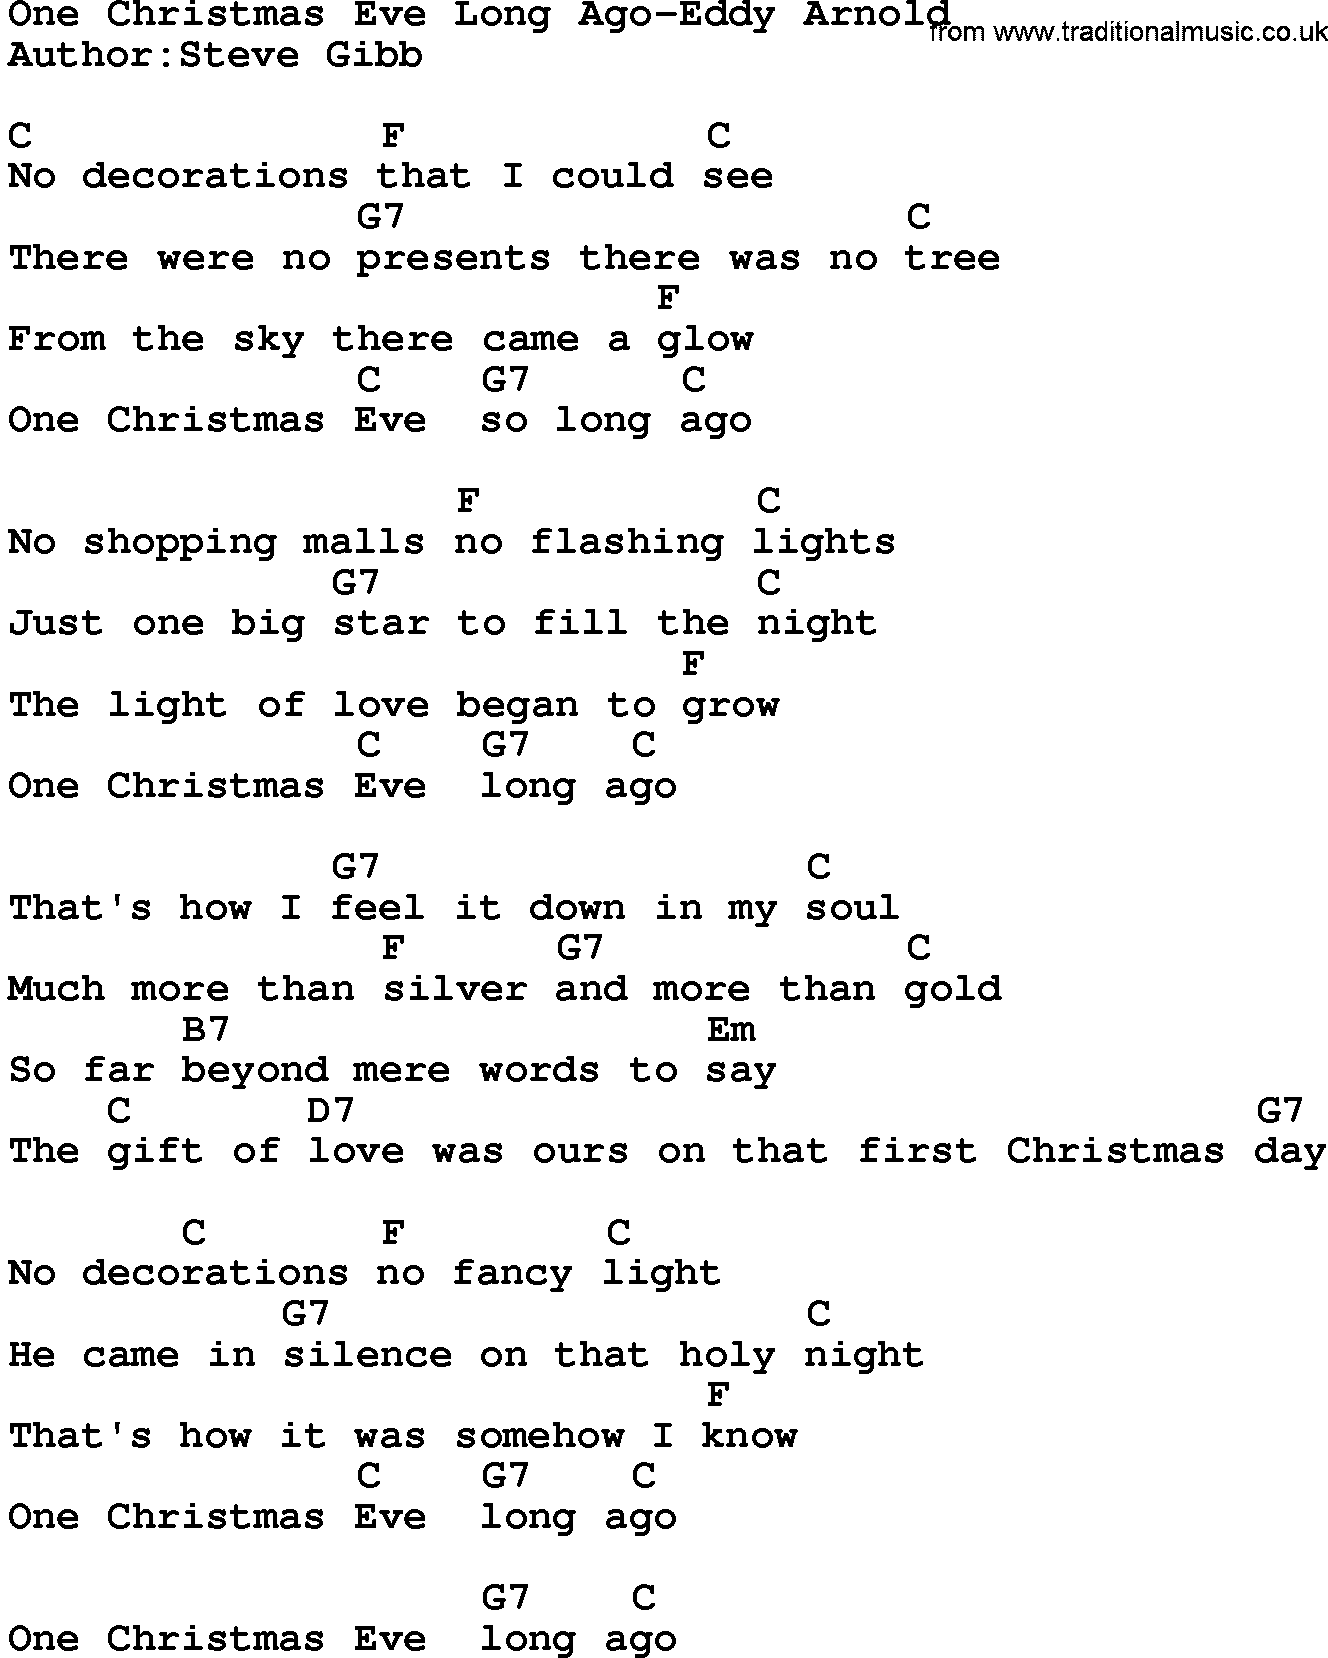 Christmas eve lyrics